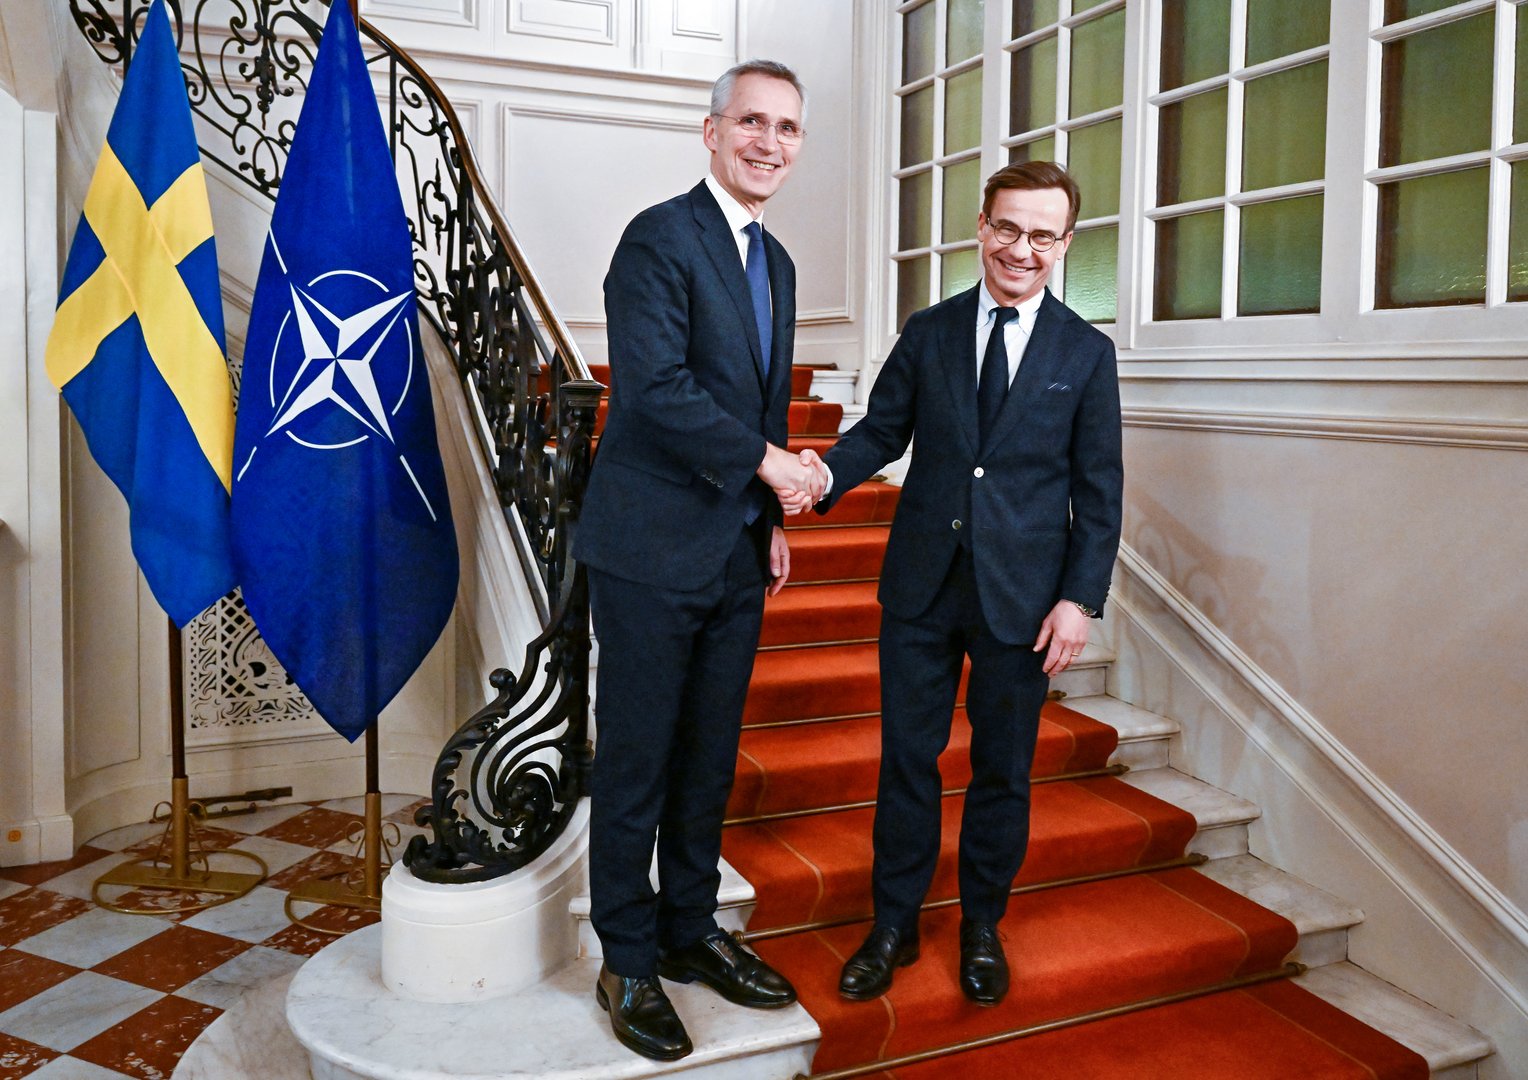 image Likelihood Finland joins NATO before Sweden has increased, Swedish PM says